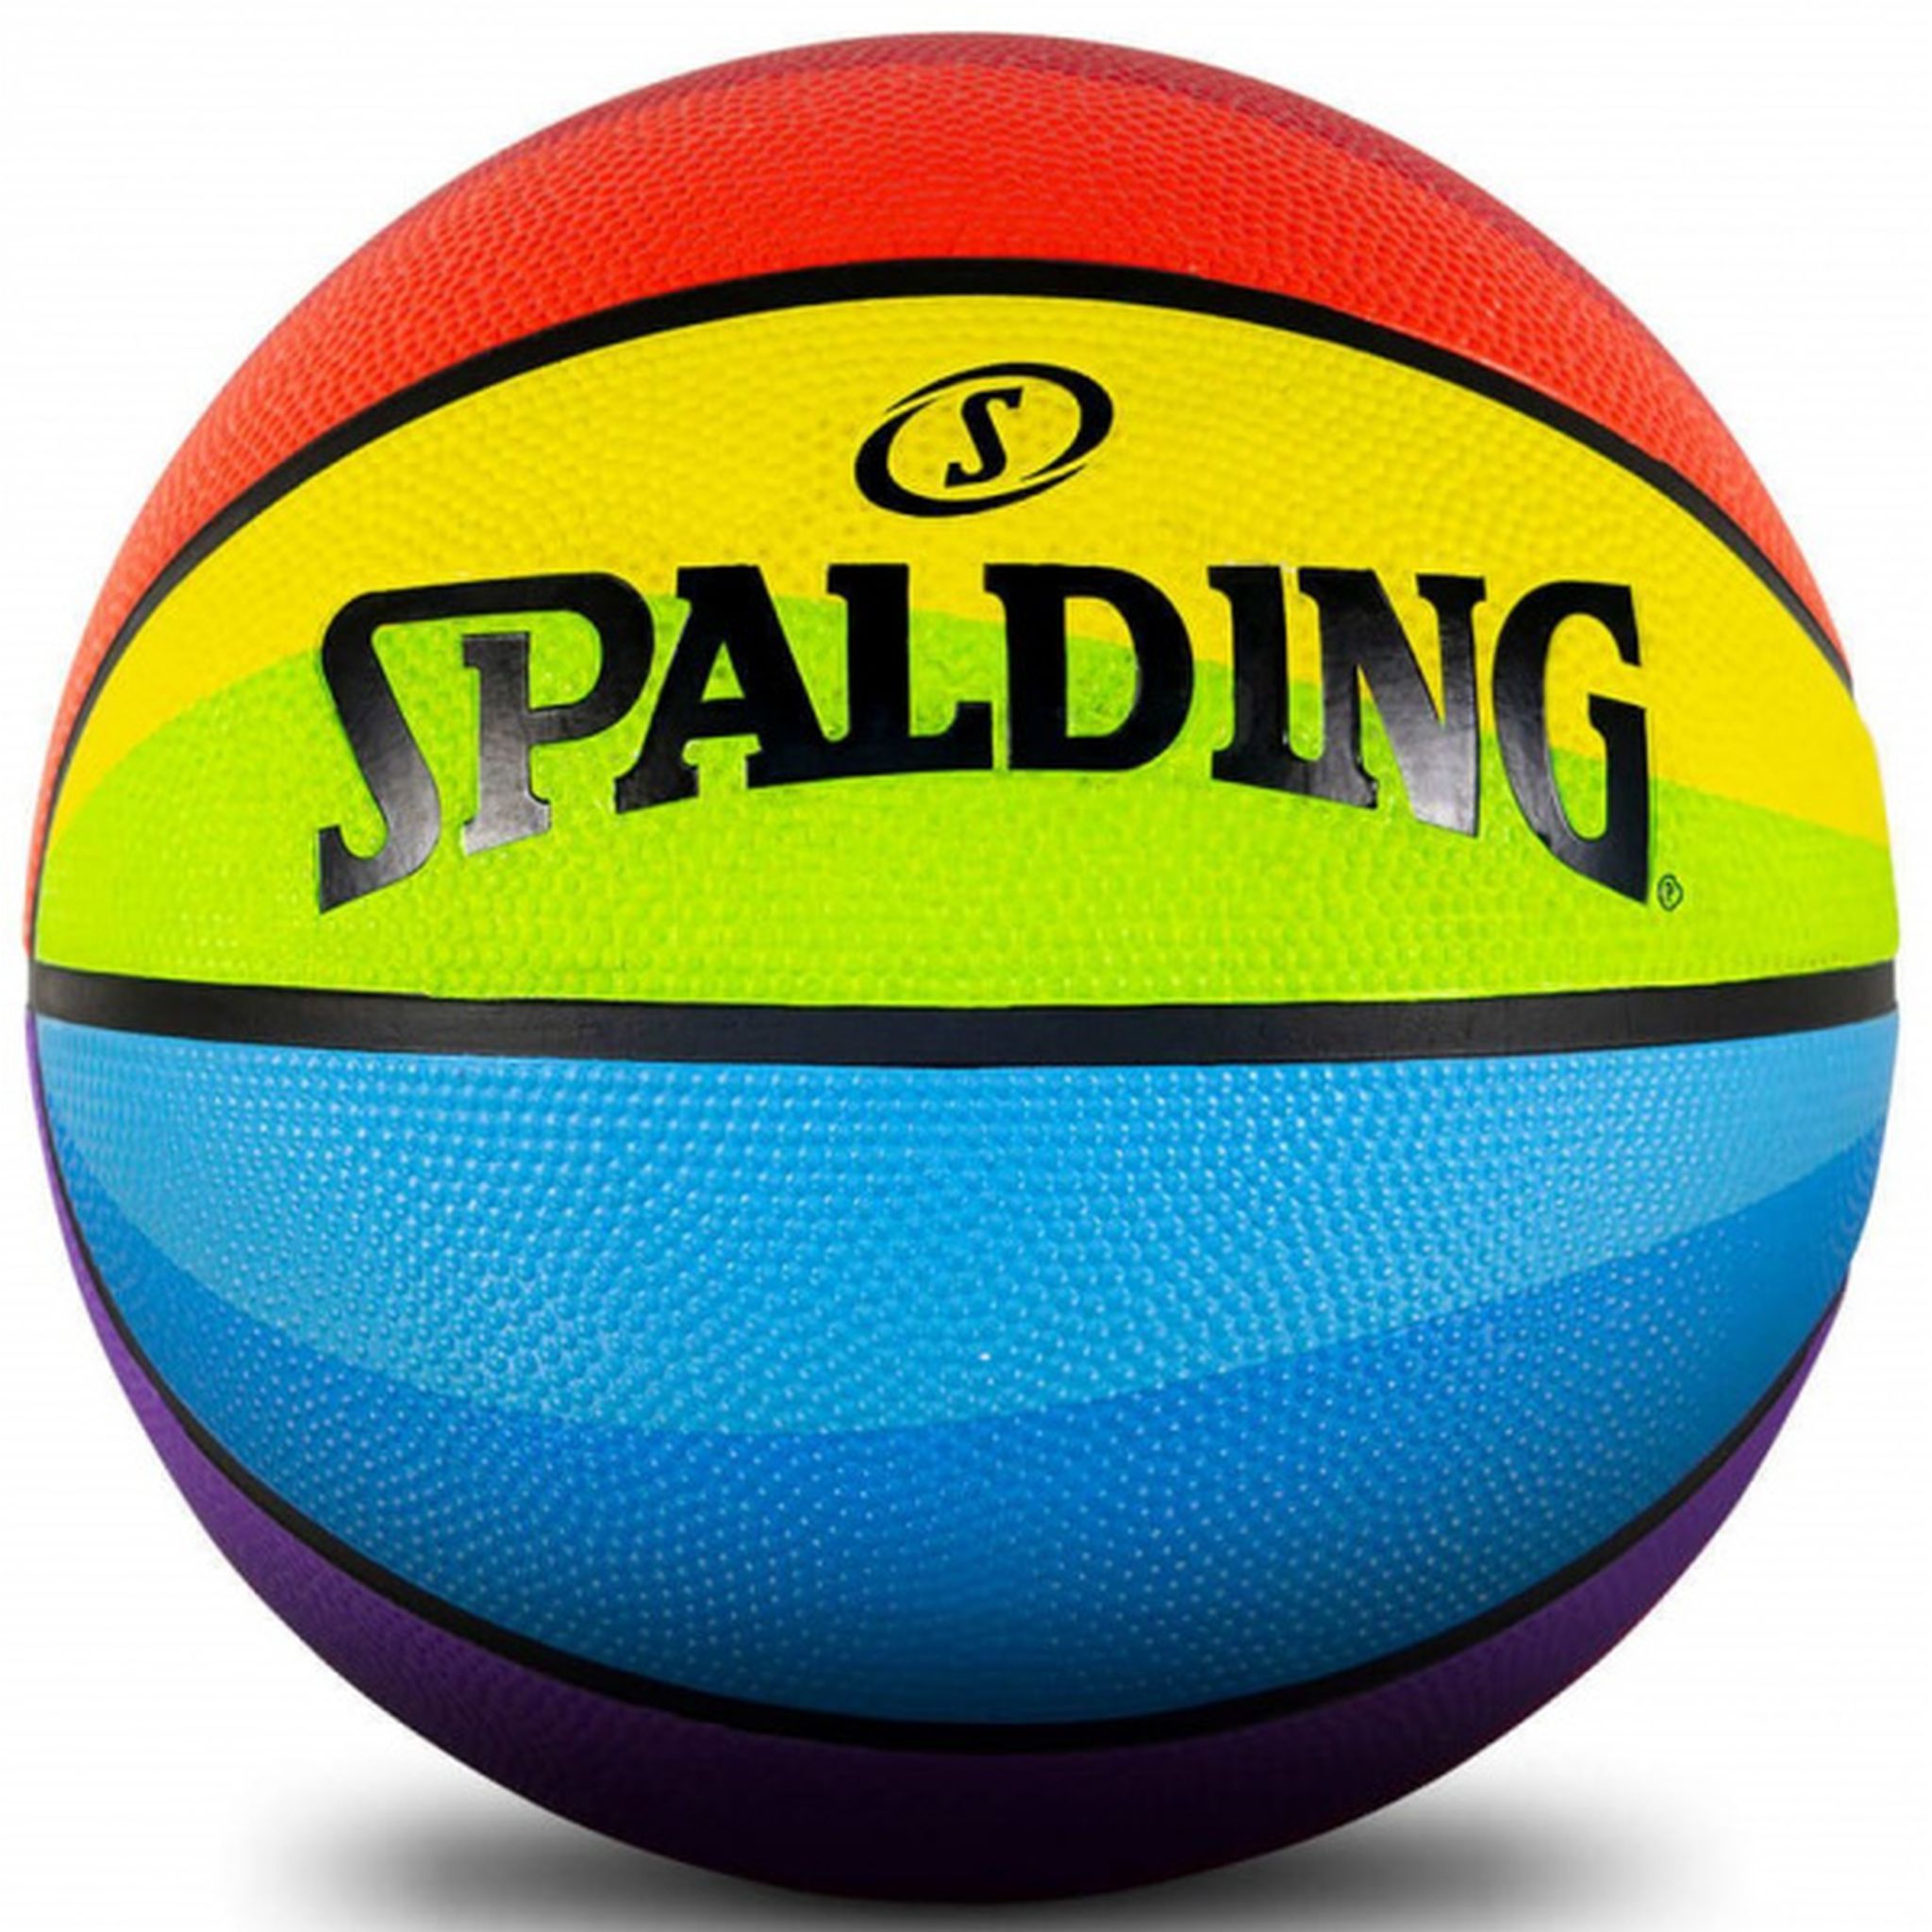 Spalding Rainbow Basketball